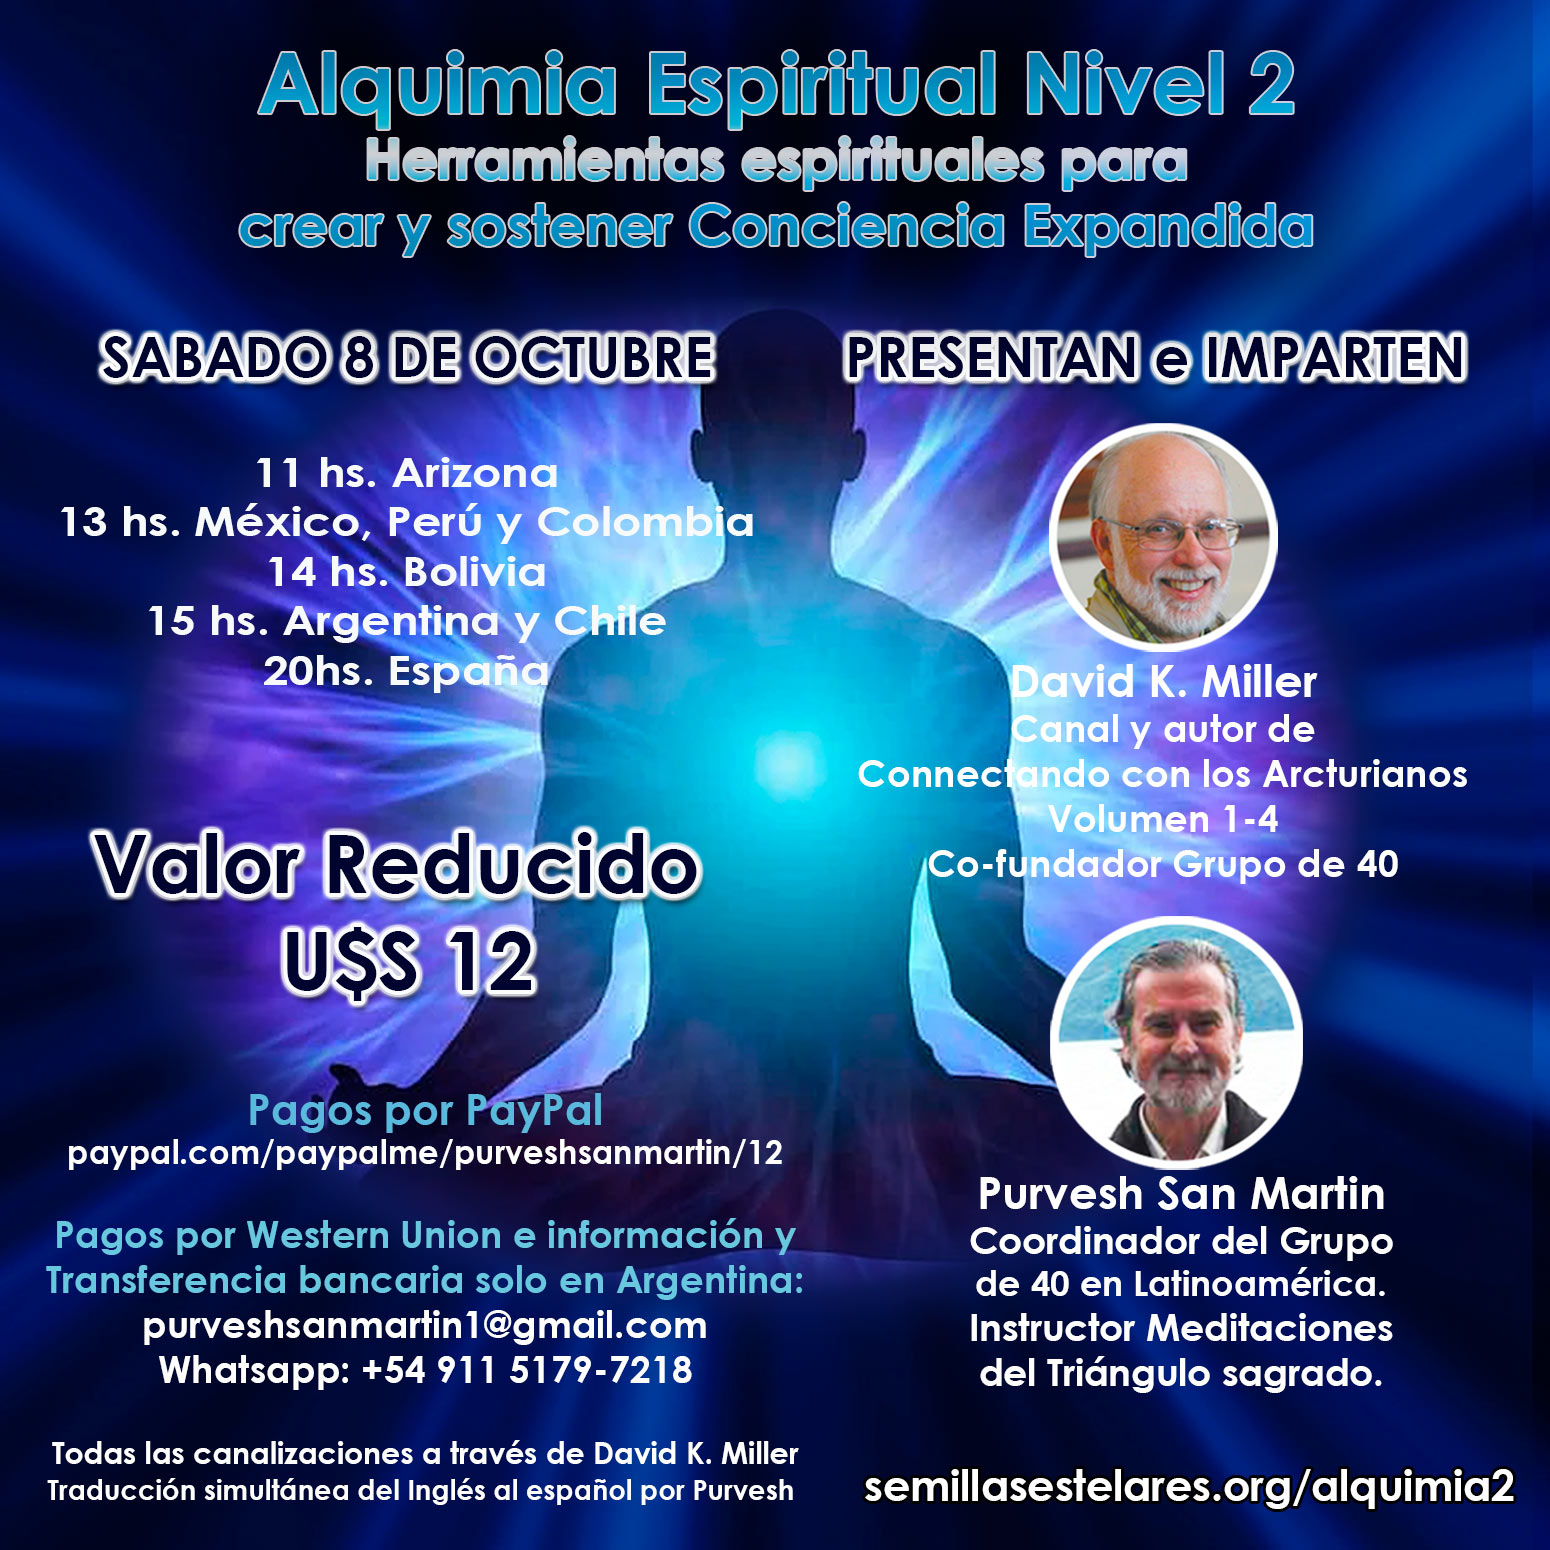 Alquimia Espiritual Nivel 2 con David Miller y Purvesh San Martín